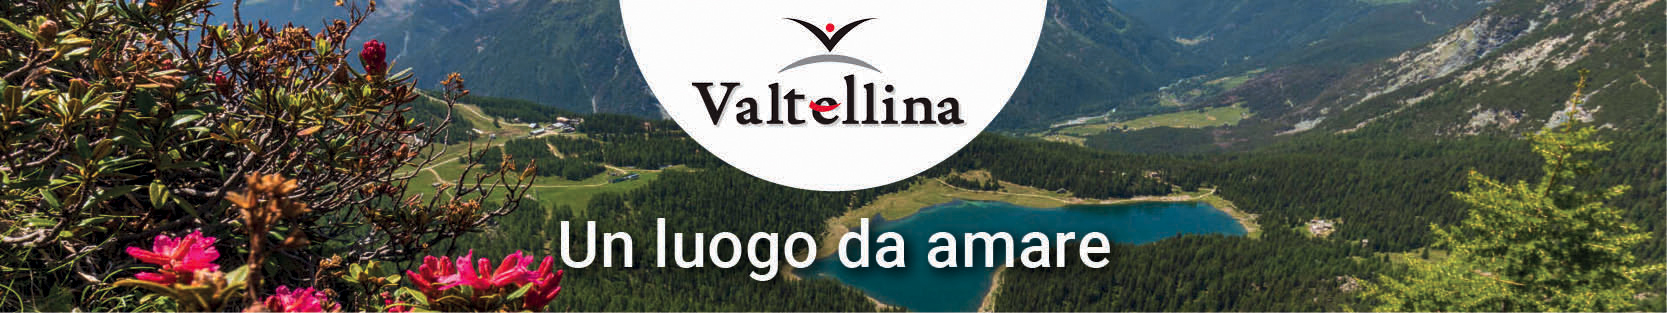 https://www.valtellina.it